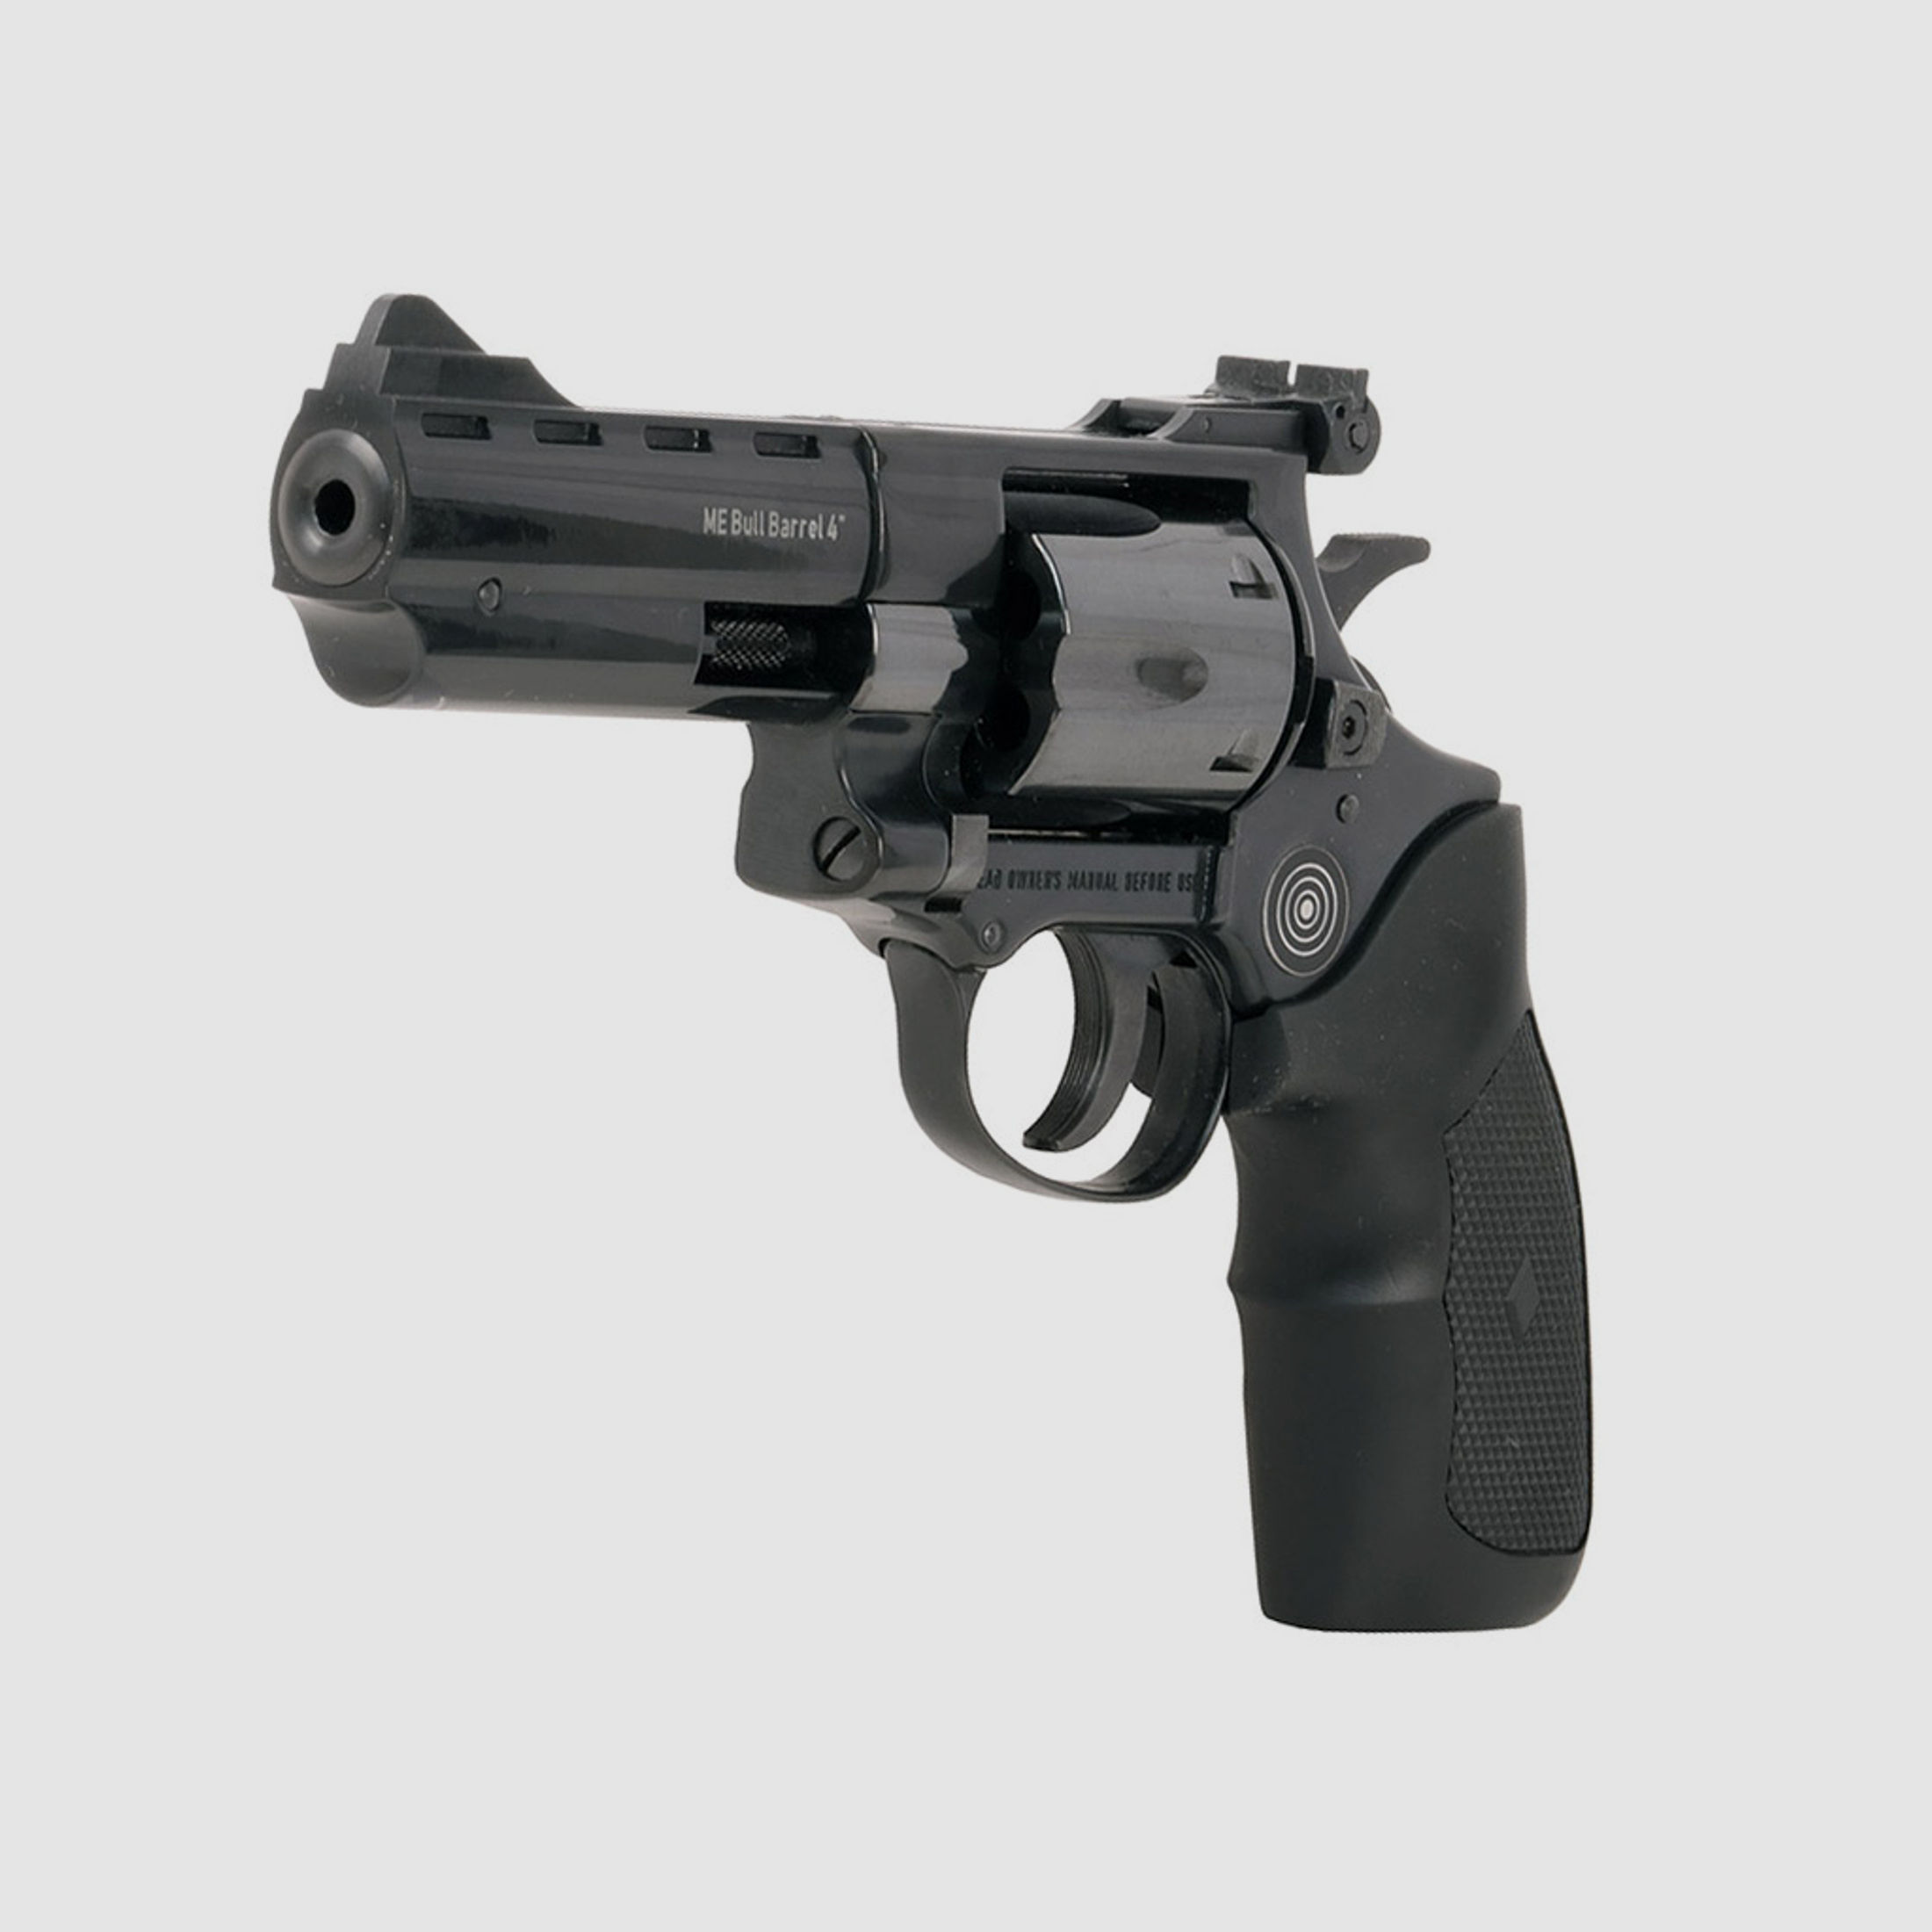 LEP Druckluft Revolver ME Bull Barrel 4 Zoll brĂĽniert Kaliber 5,5 mm (P18)